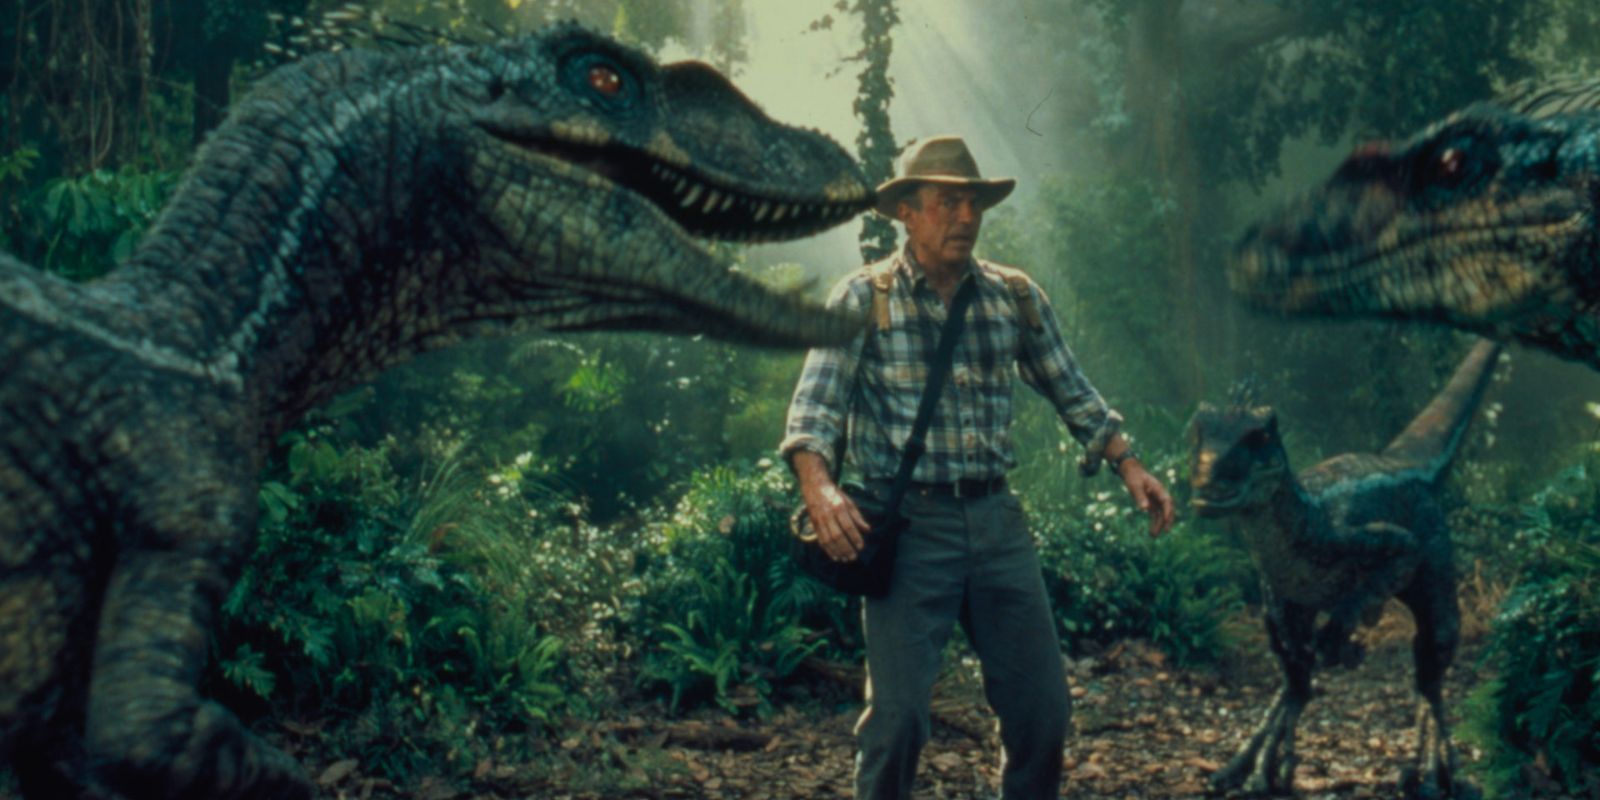 Alan Grant among some raptors in Jurassic Park 3.